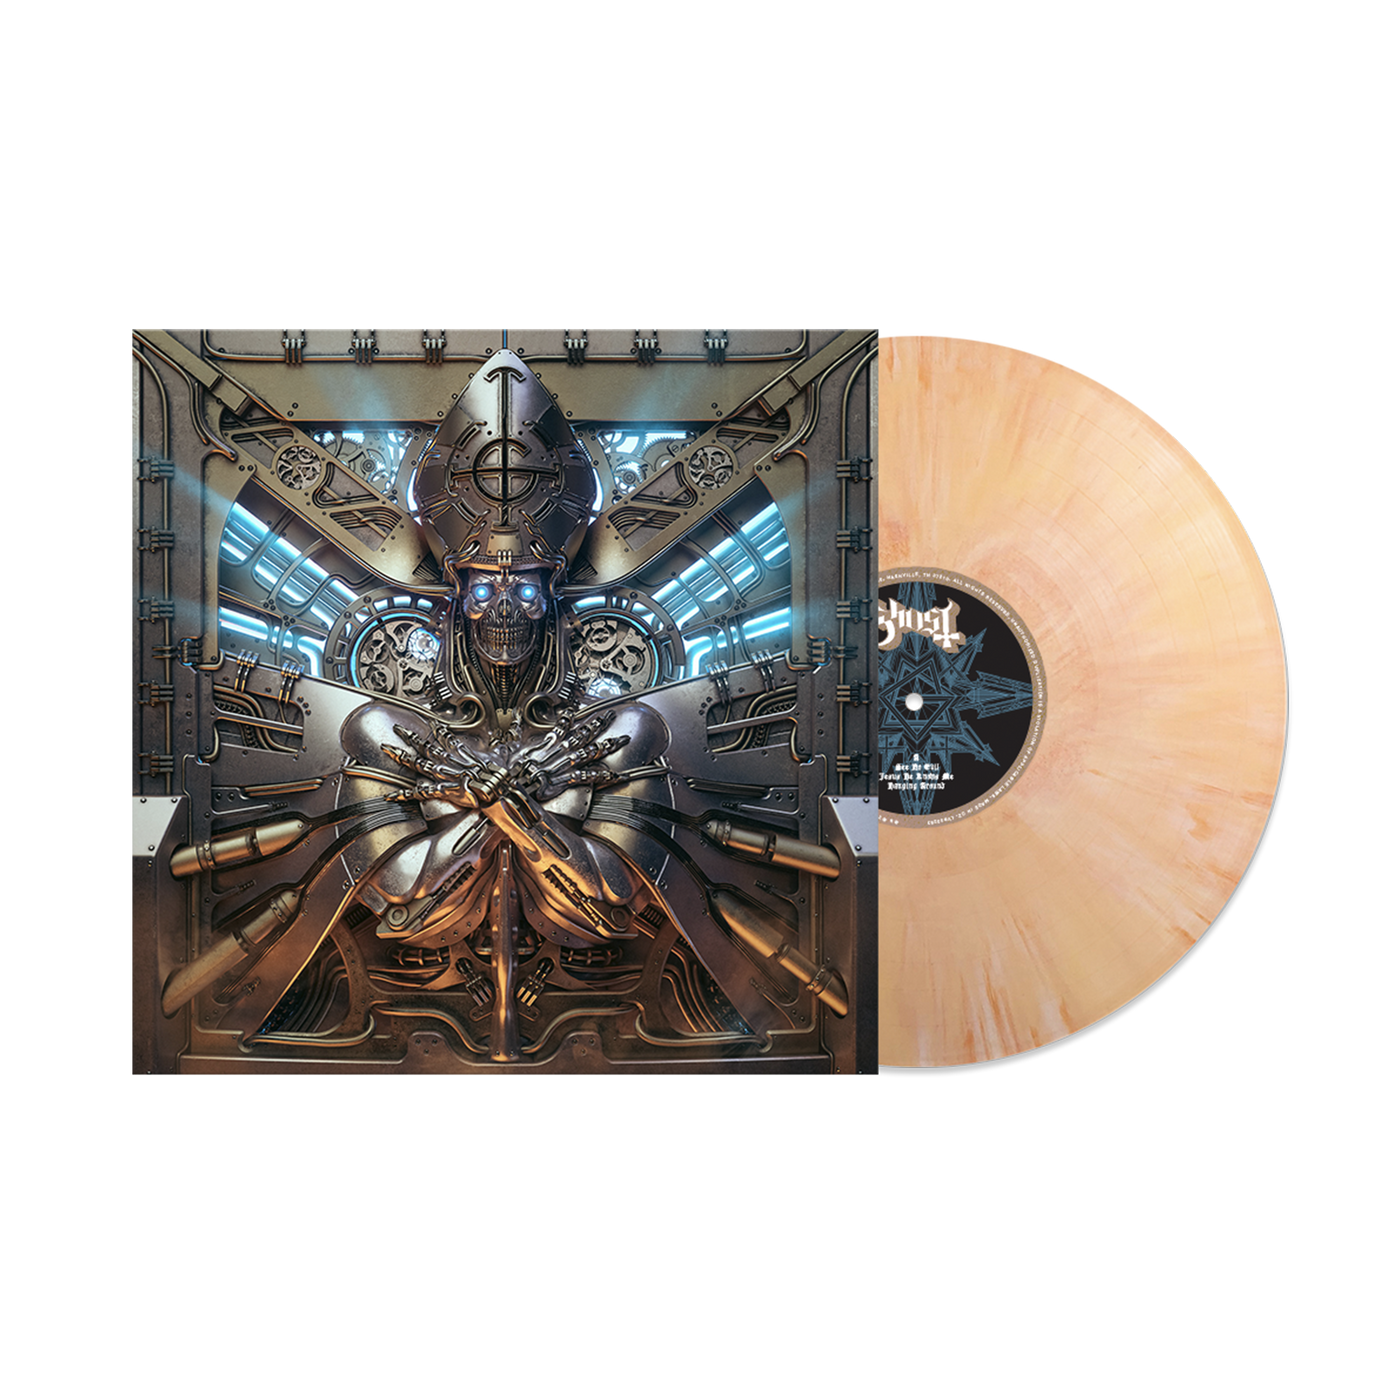 Ghost - Phantomime Ghost + LV Exclusive Colored Vinyl (Dreamsicle Vinyl)